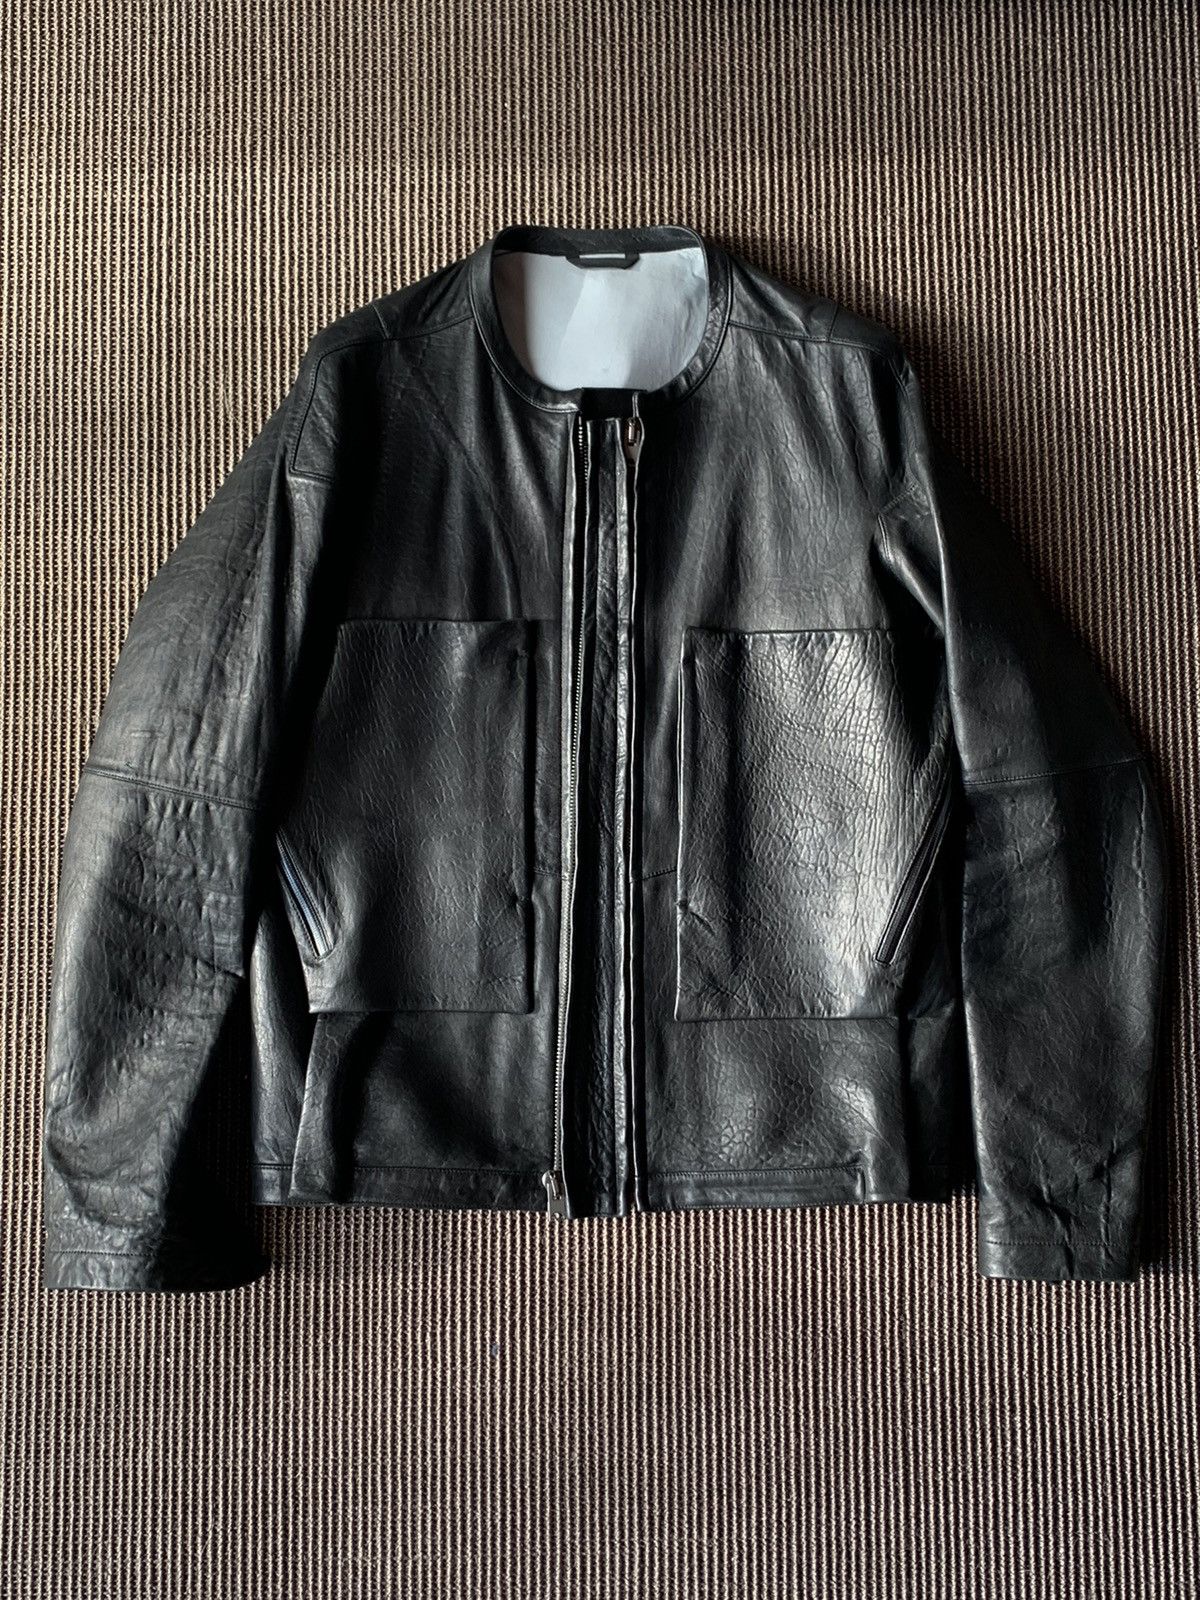 Acronym NMN_ACR_J40_L size medium 3 layer leather jacket Size US M / EU 48-50 / 2 - 1 Preview